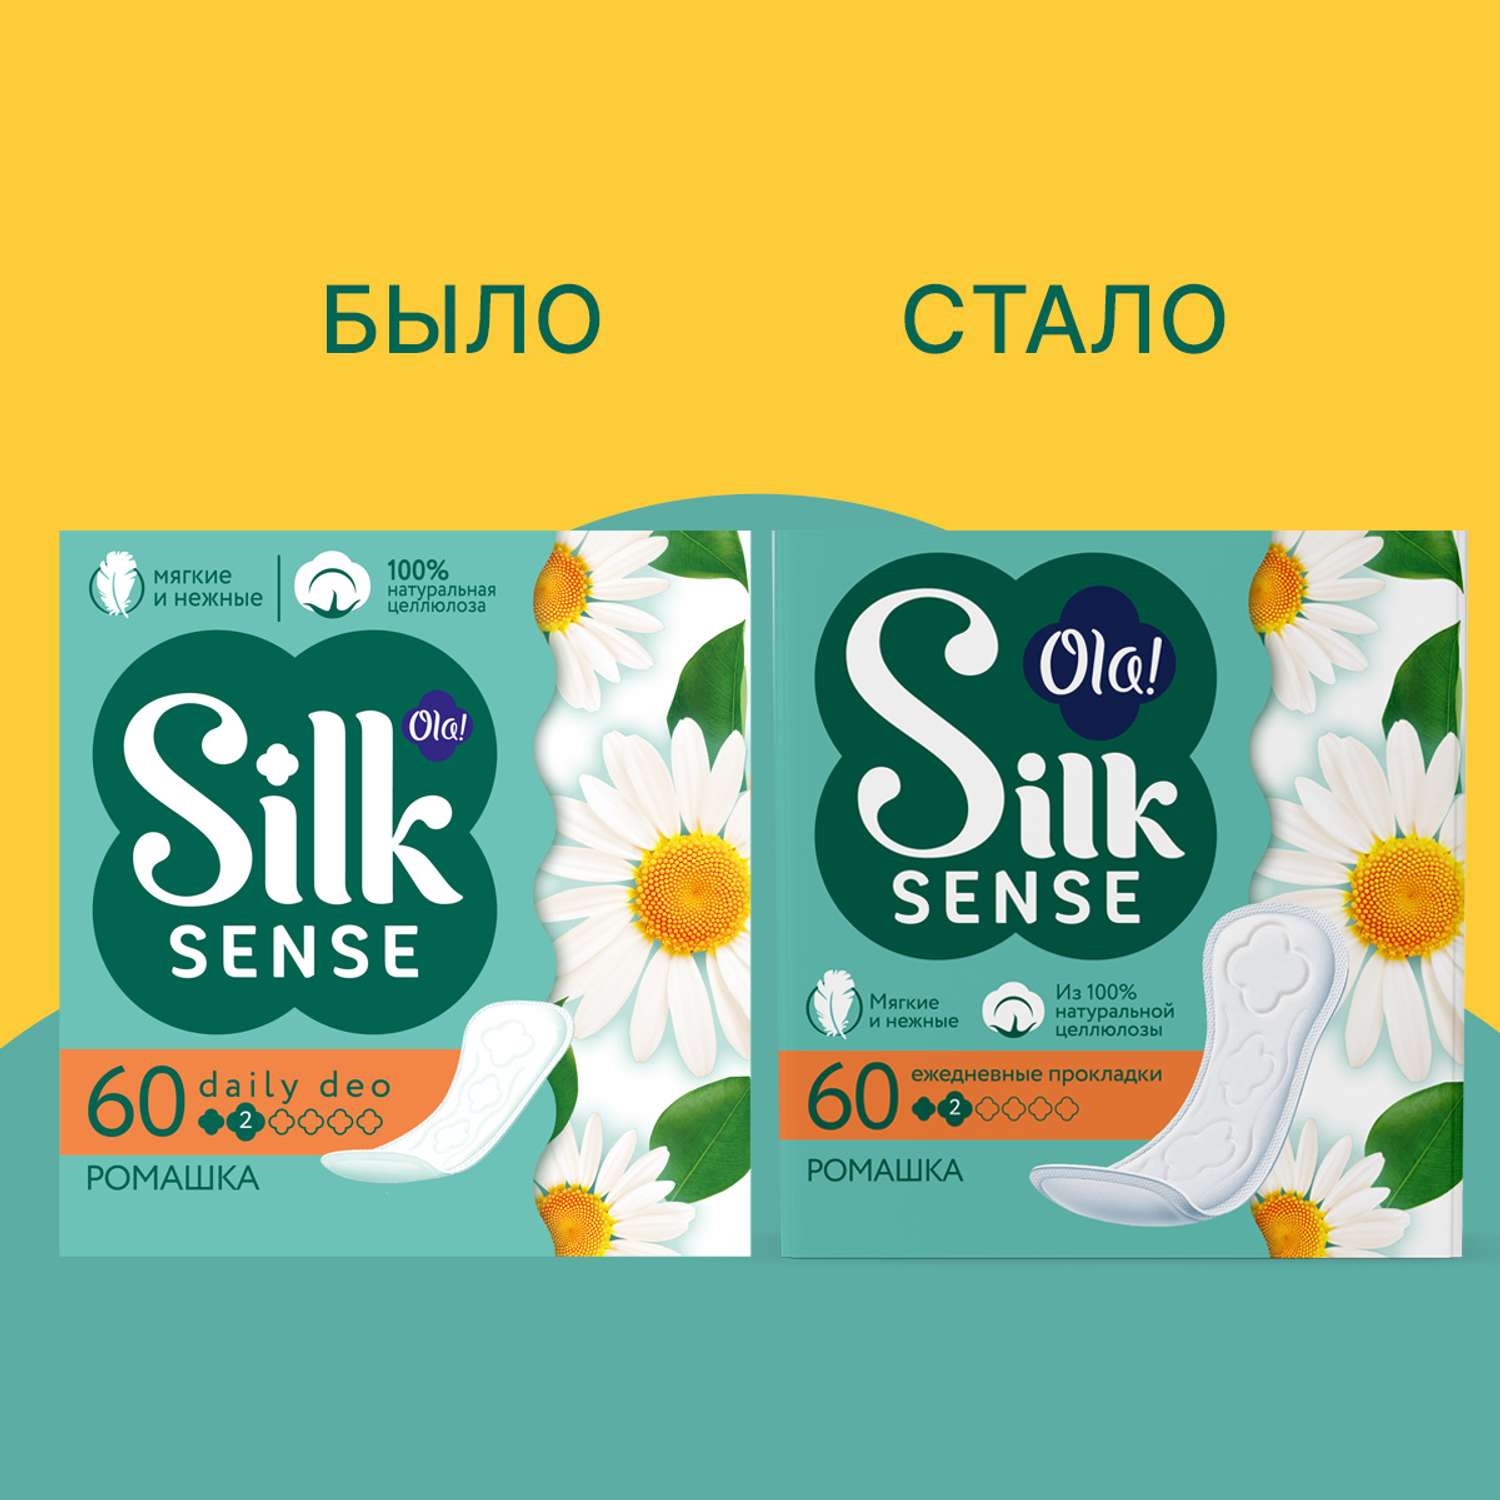 Ежедневные прокладки Ola! Silk Sense Daily Deo ежедневные Ромашка 60x3 упаковки 180 шт - фото 3